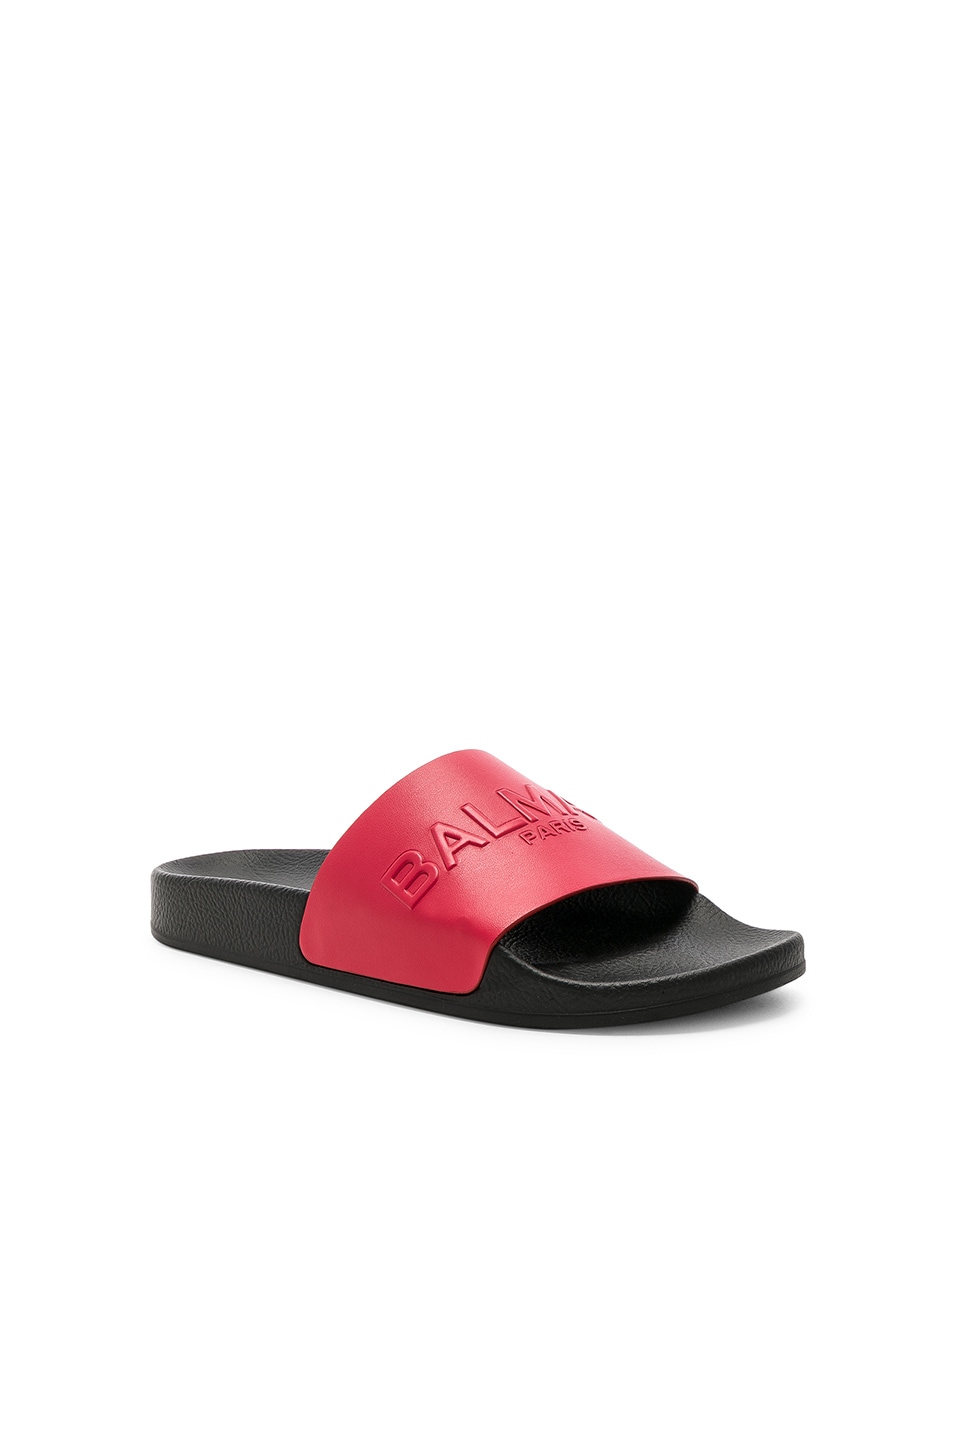 BALMAIN Leather Calypso Sandals in Red | FWRD